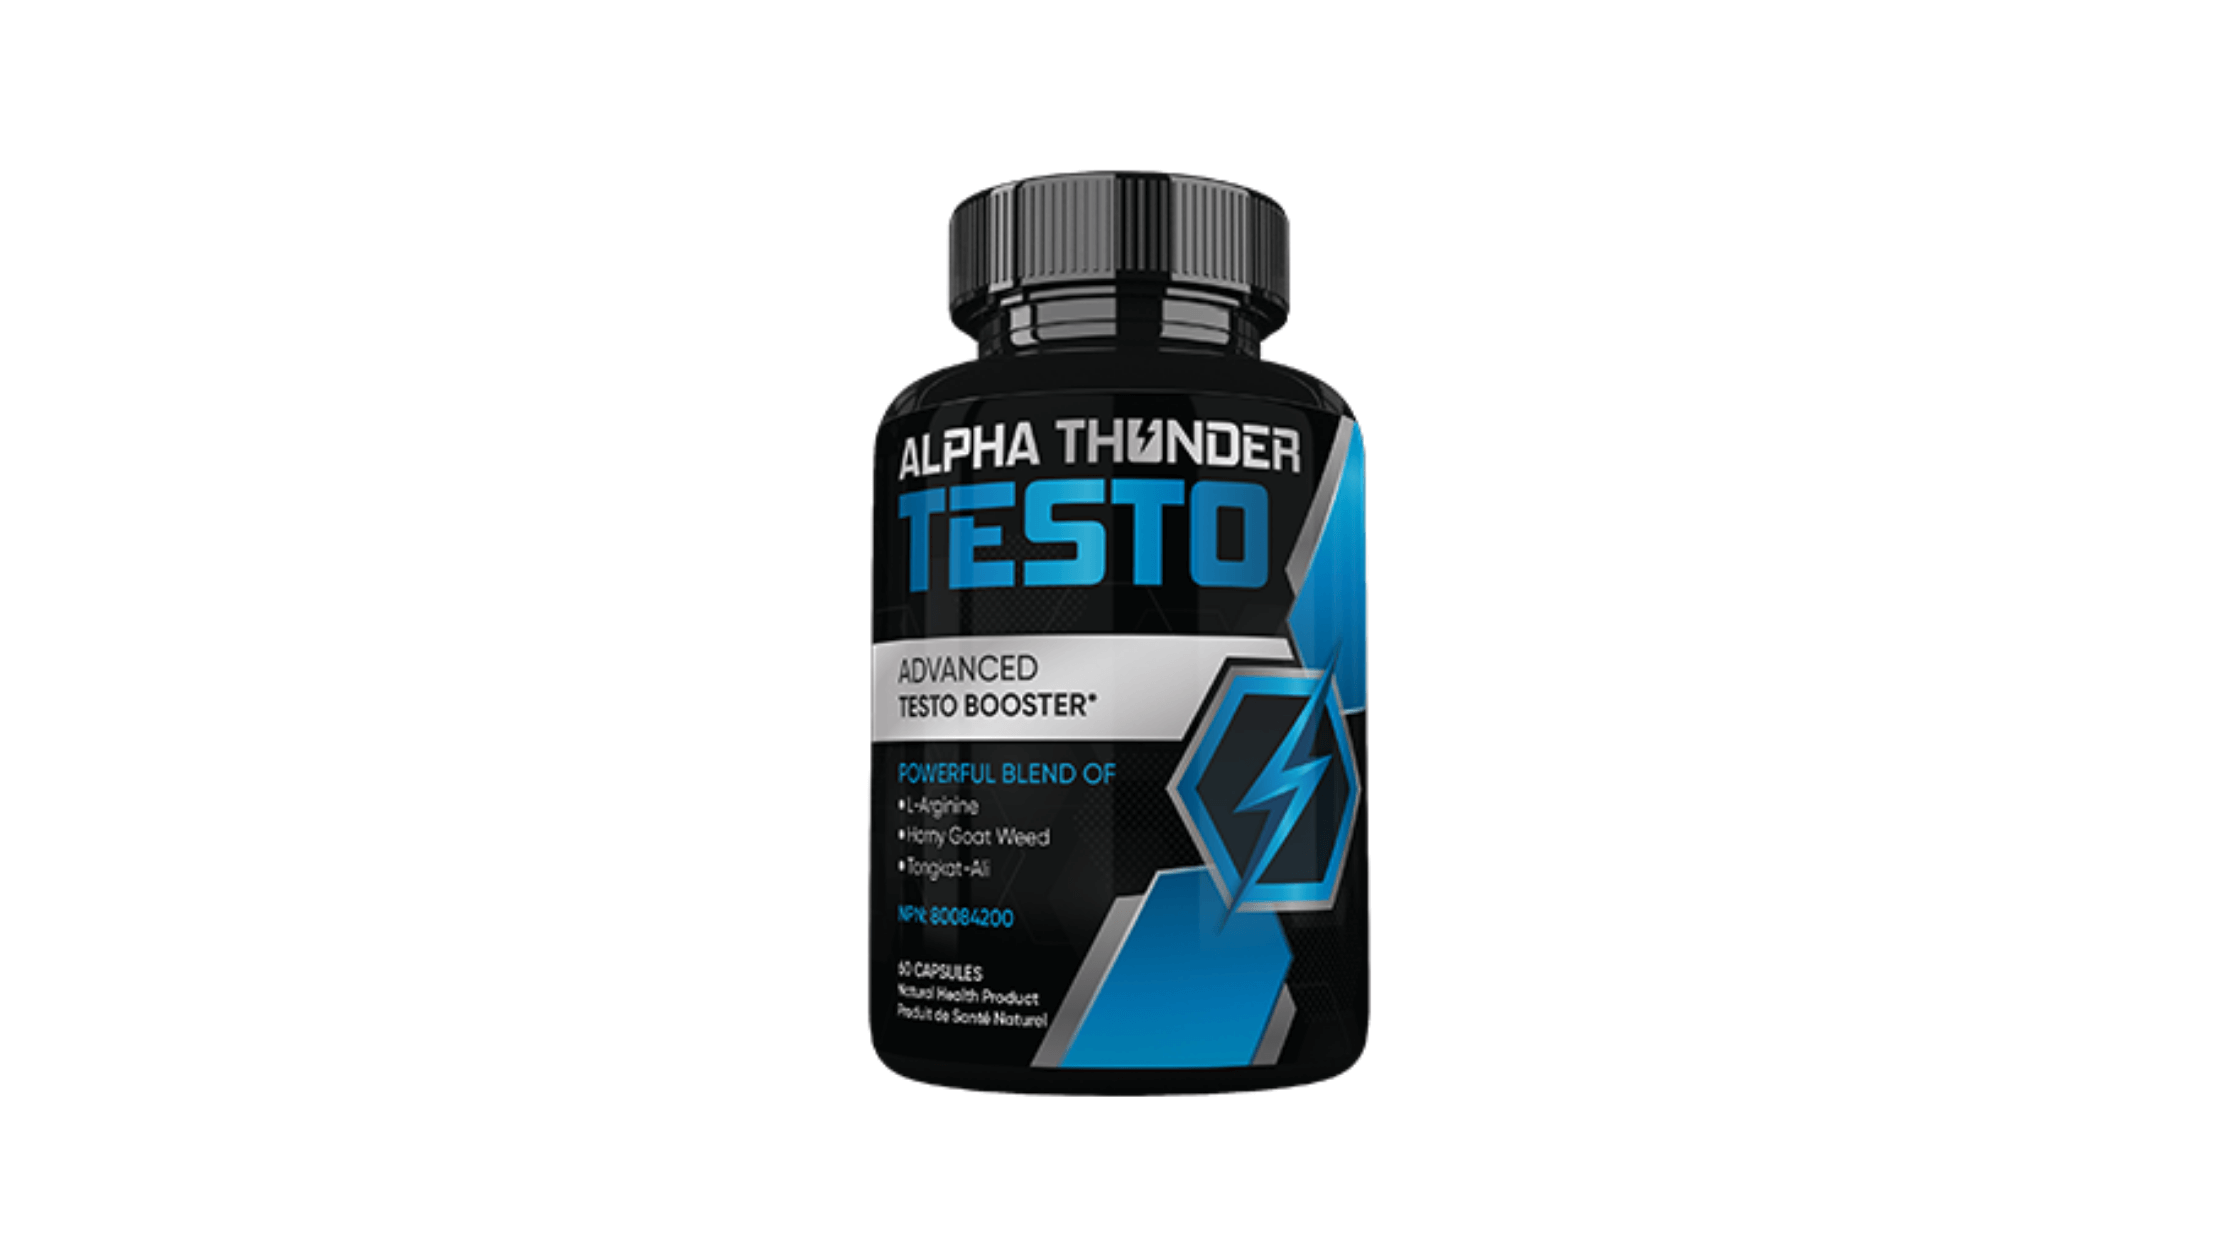 Alpha Thunder Testo Reviews